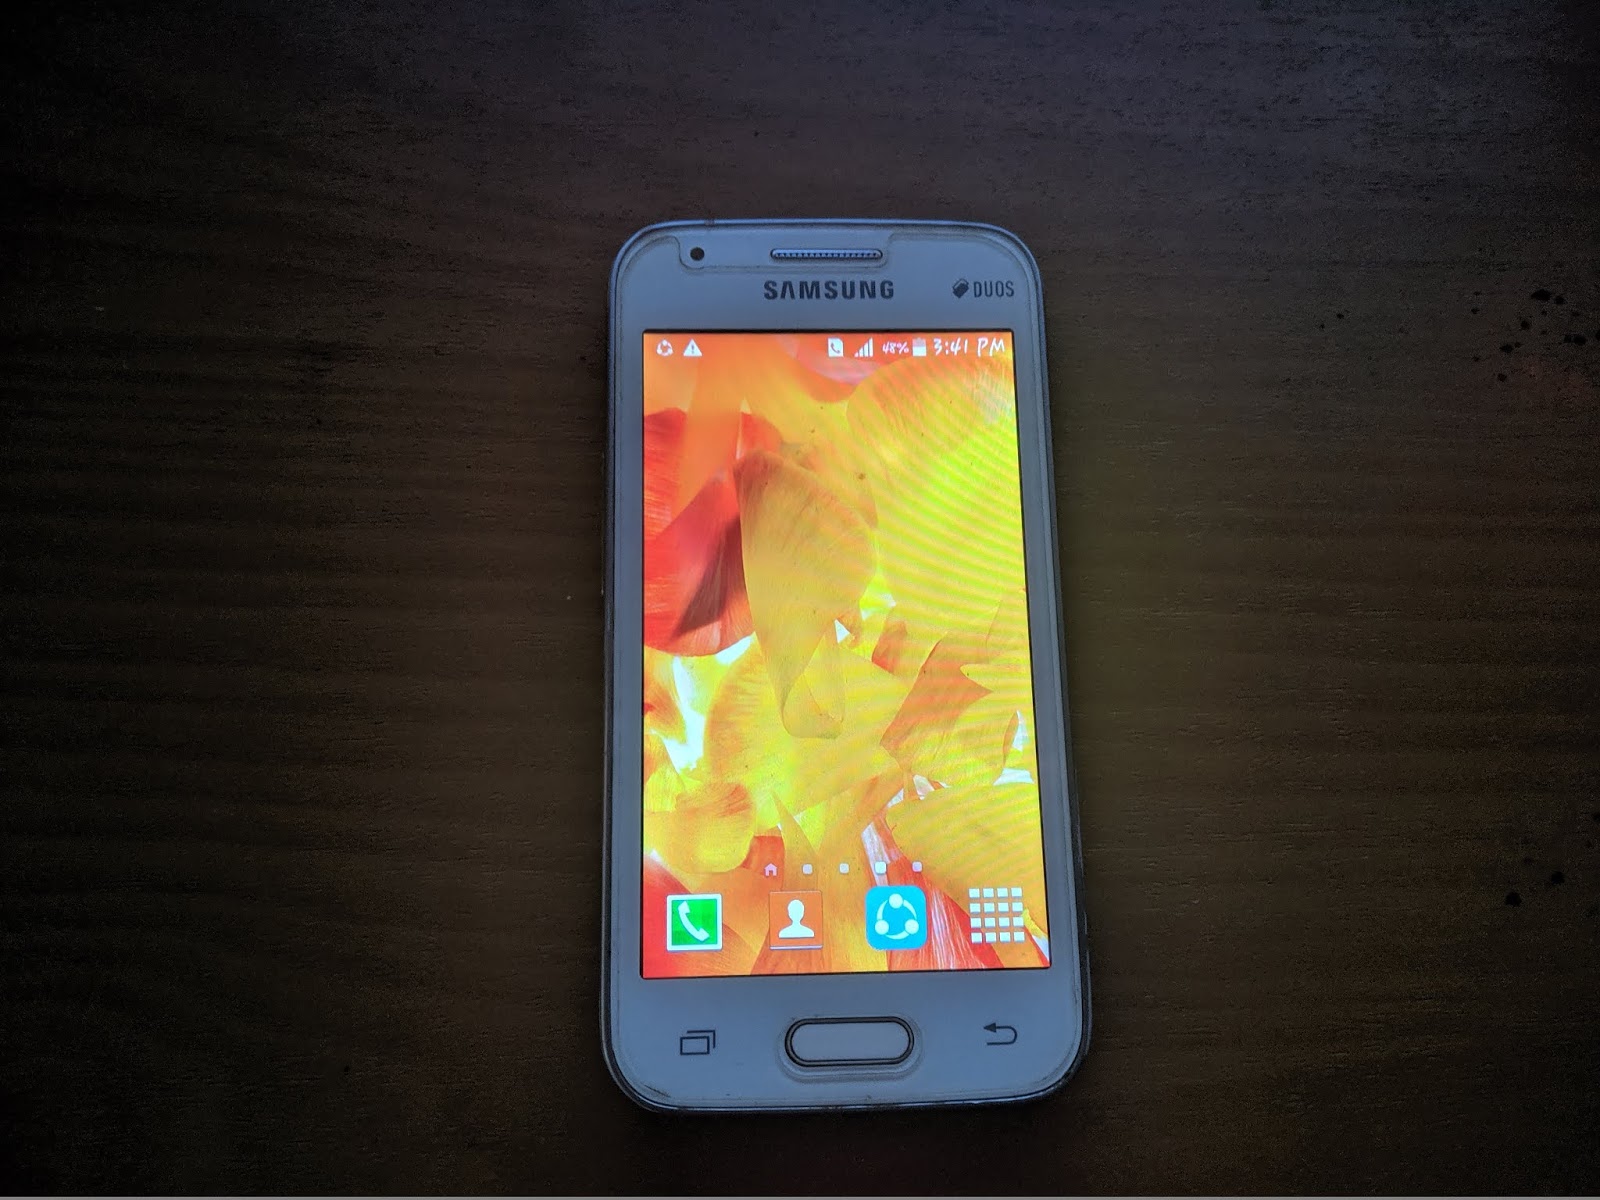 Samsung Galaxy V SM-G313HZ